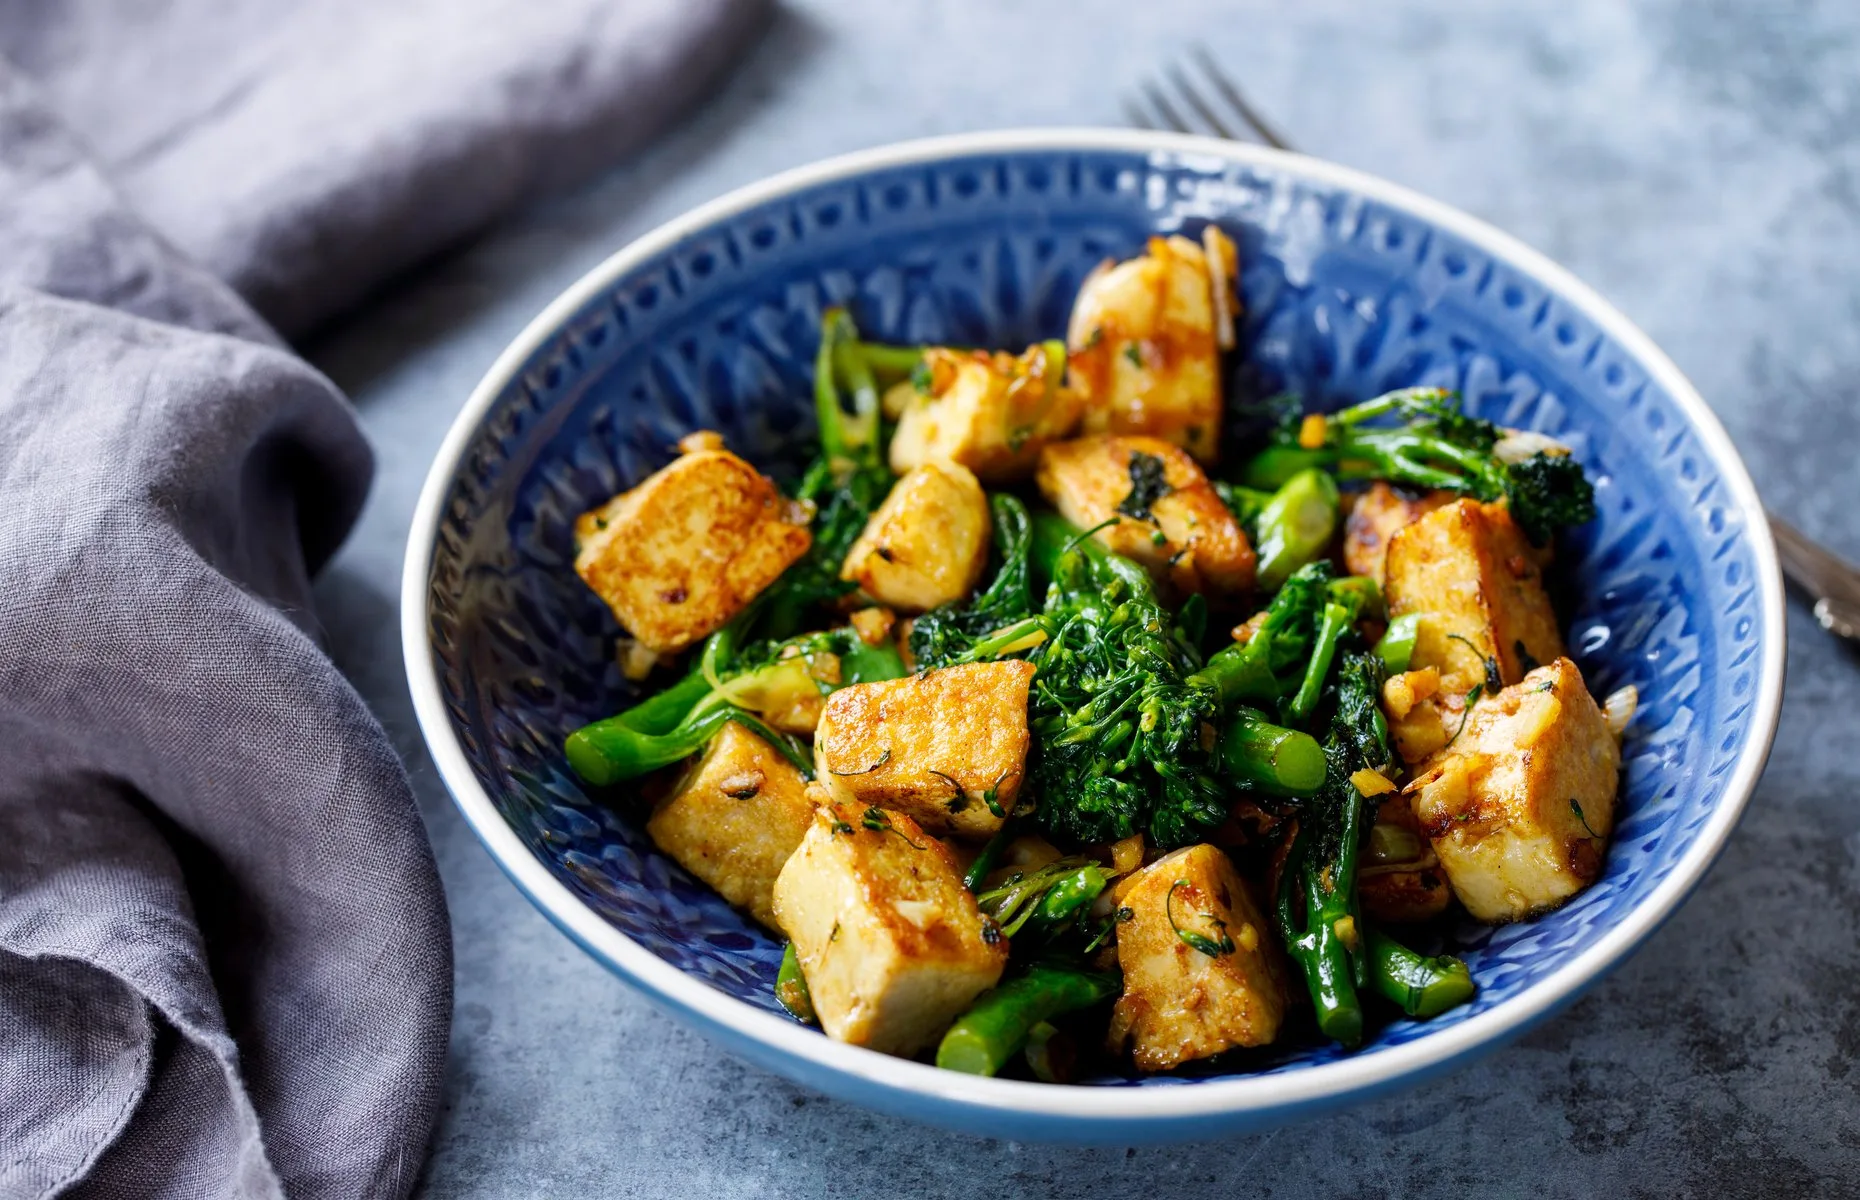 Tofu: Health Benefits of This Vegan Superfood